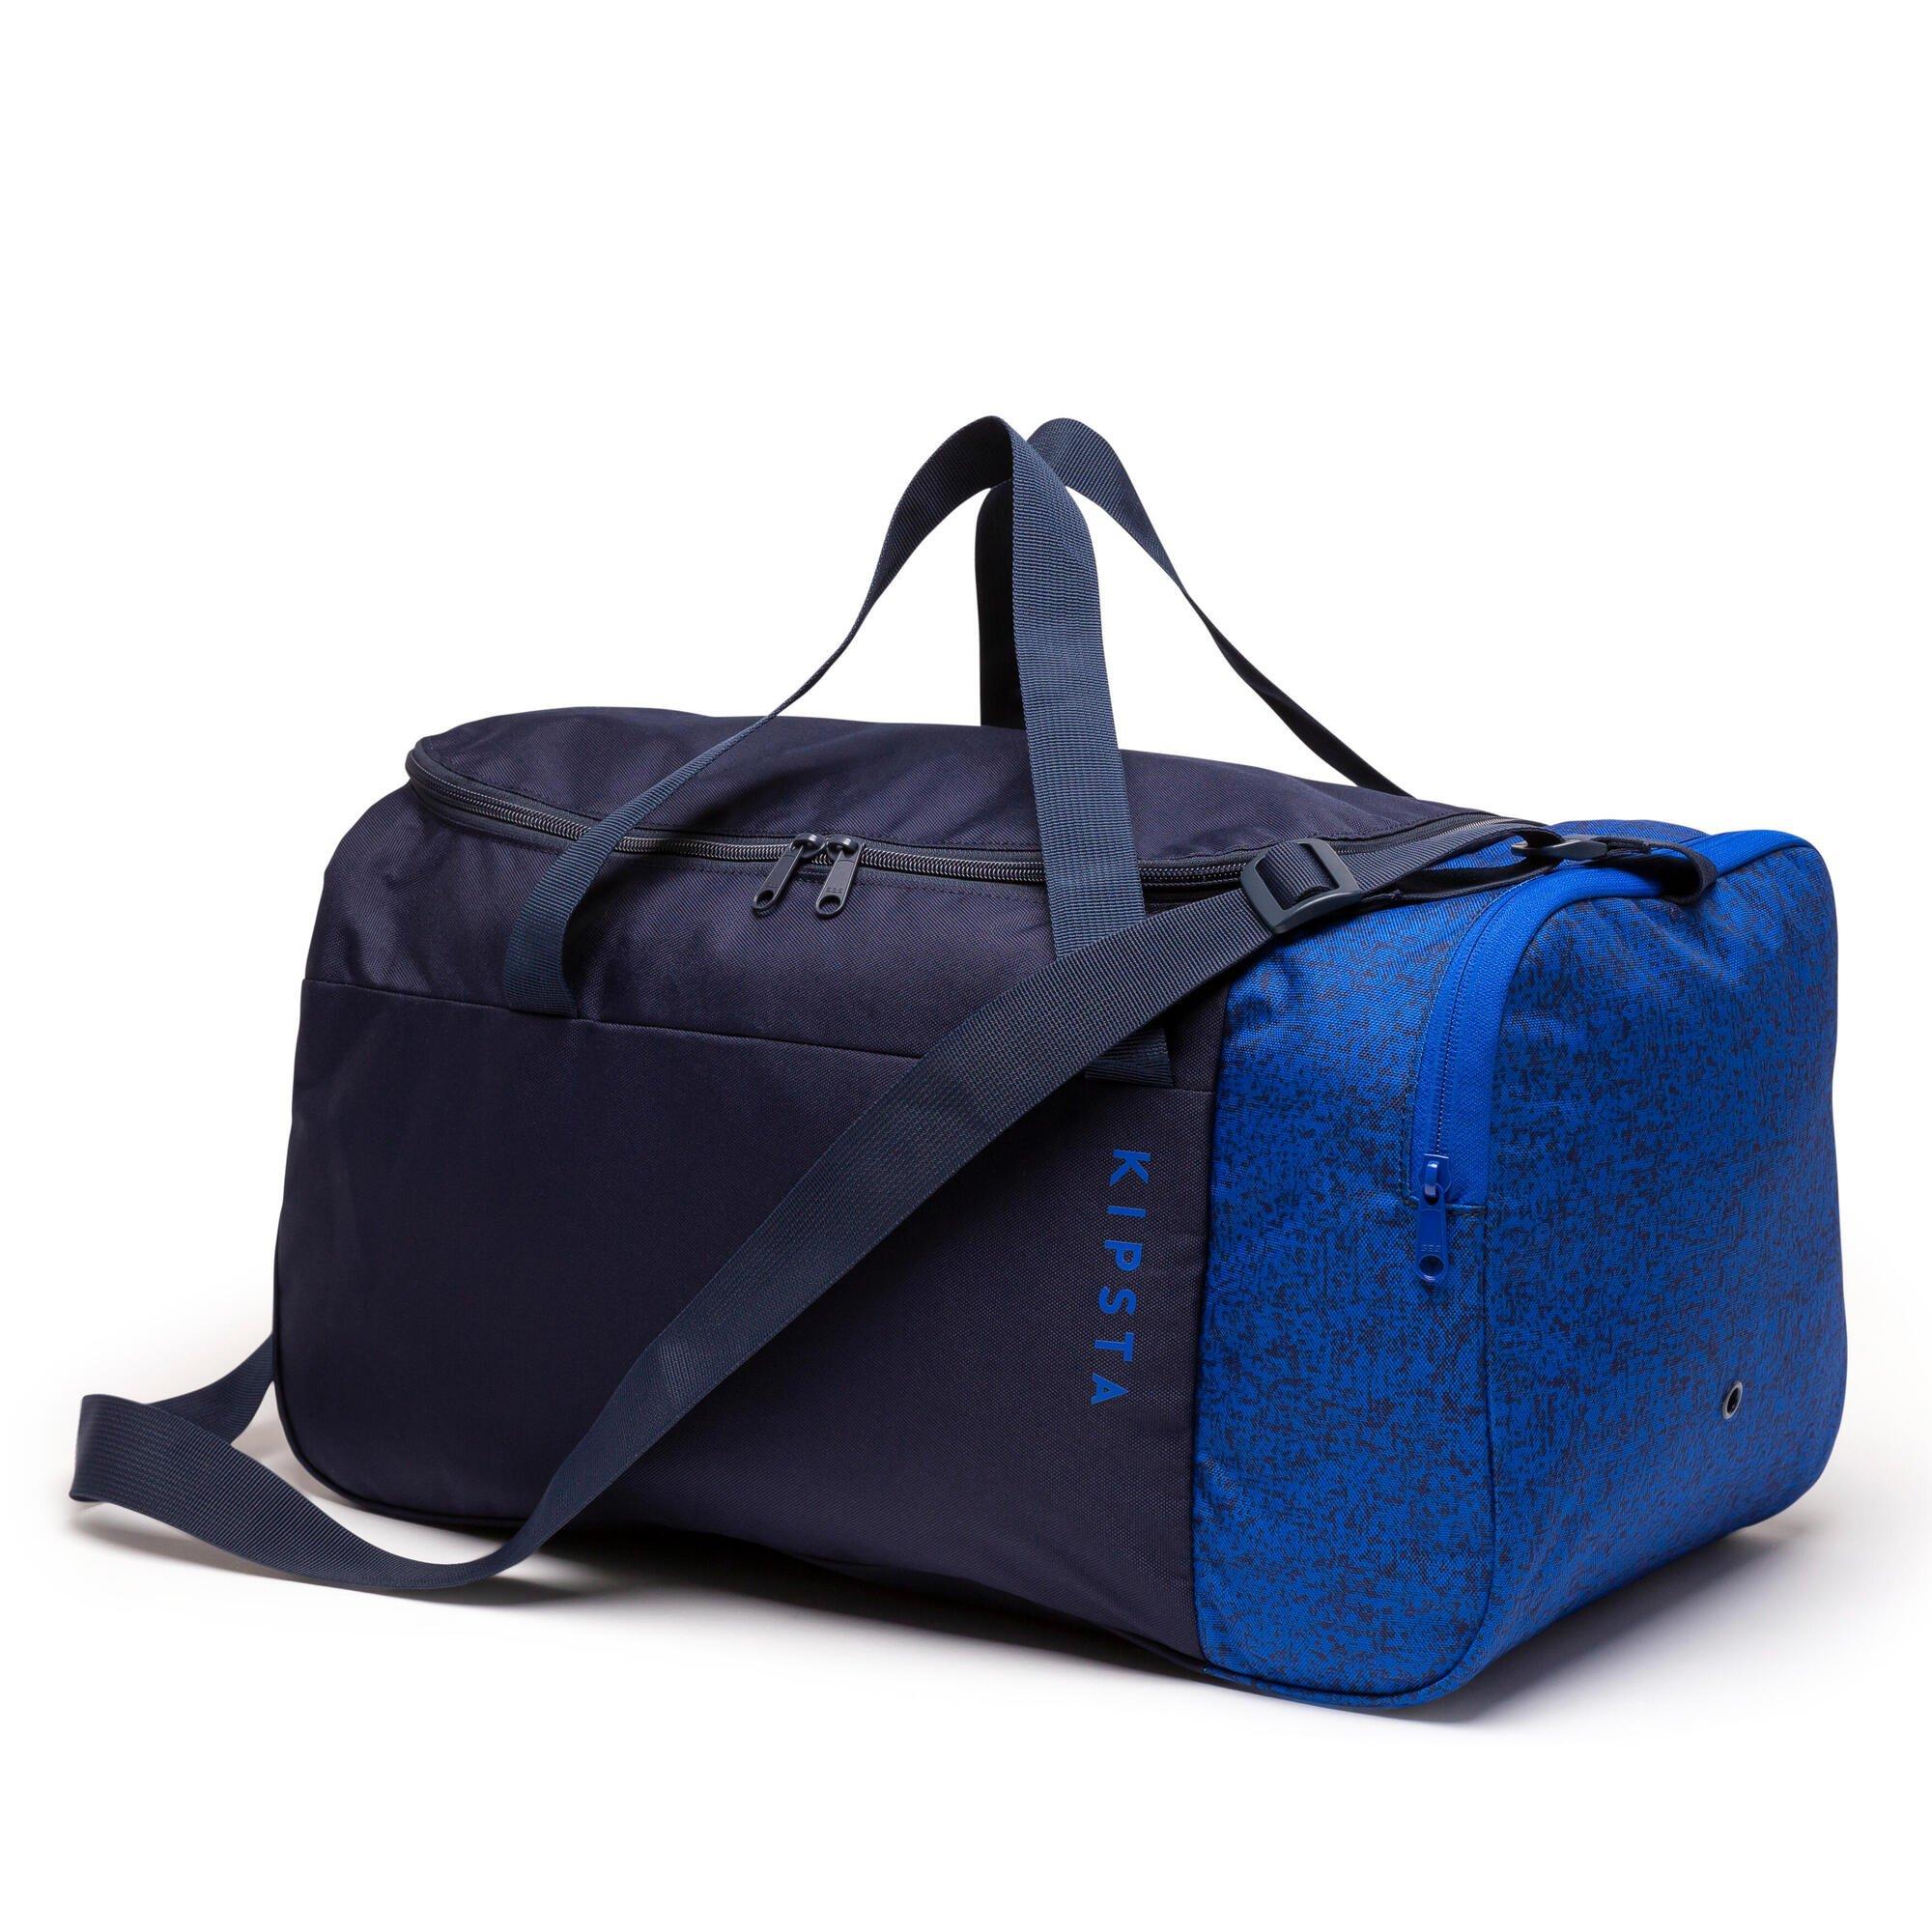 Спортивная сумка Decathlon Essential 35 л. Kipsta, темно-синий набор для вышивания lovely mum мамочка 26 x 26 см bothy threads xhd2